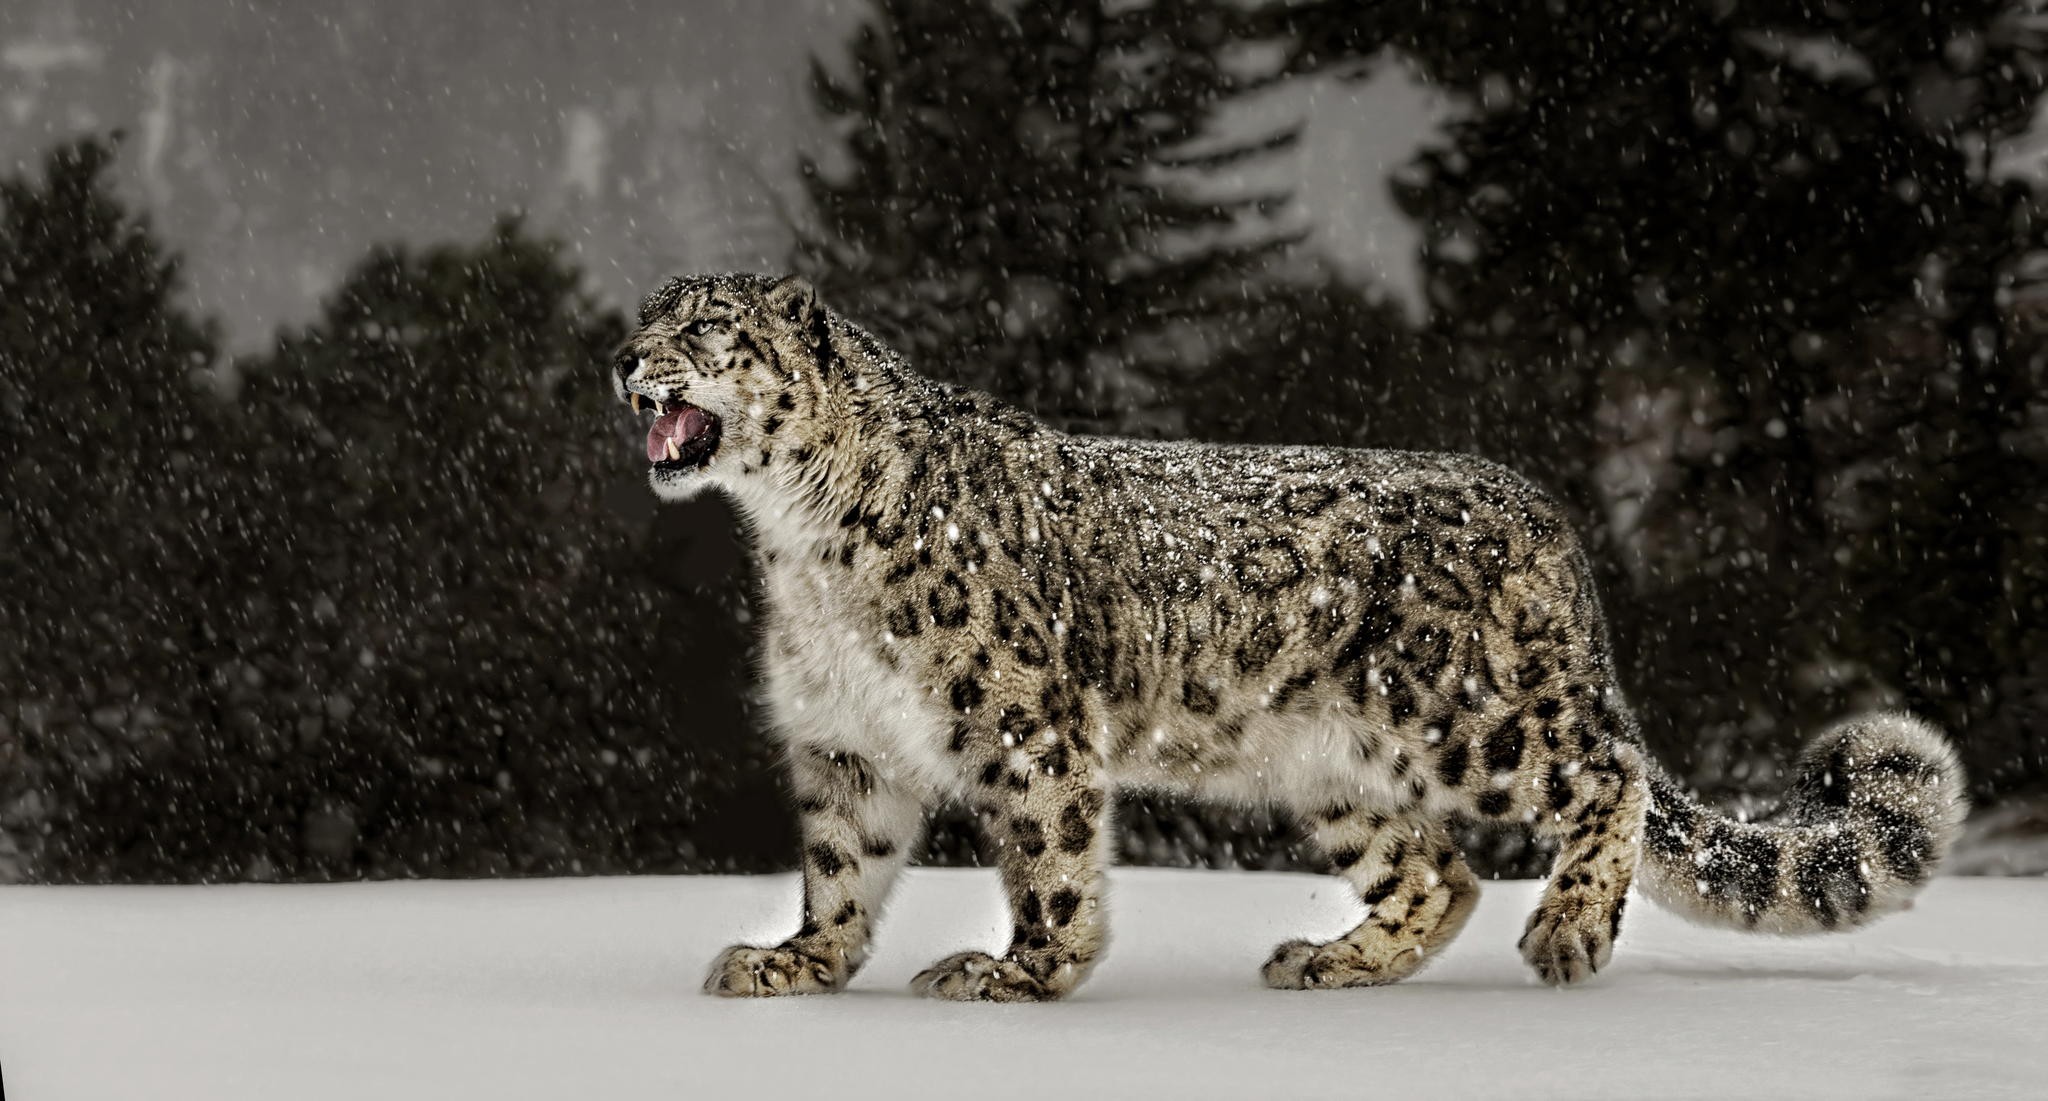 General 2048x1101 snow leopards snow nature animals big cats leopard snowing mammals fangs